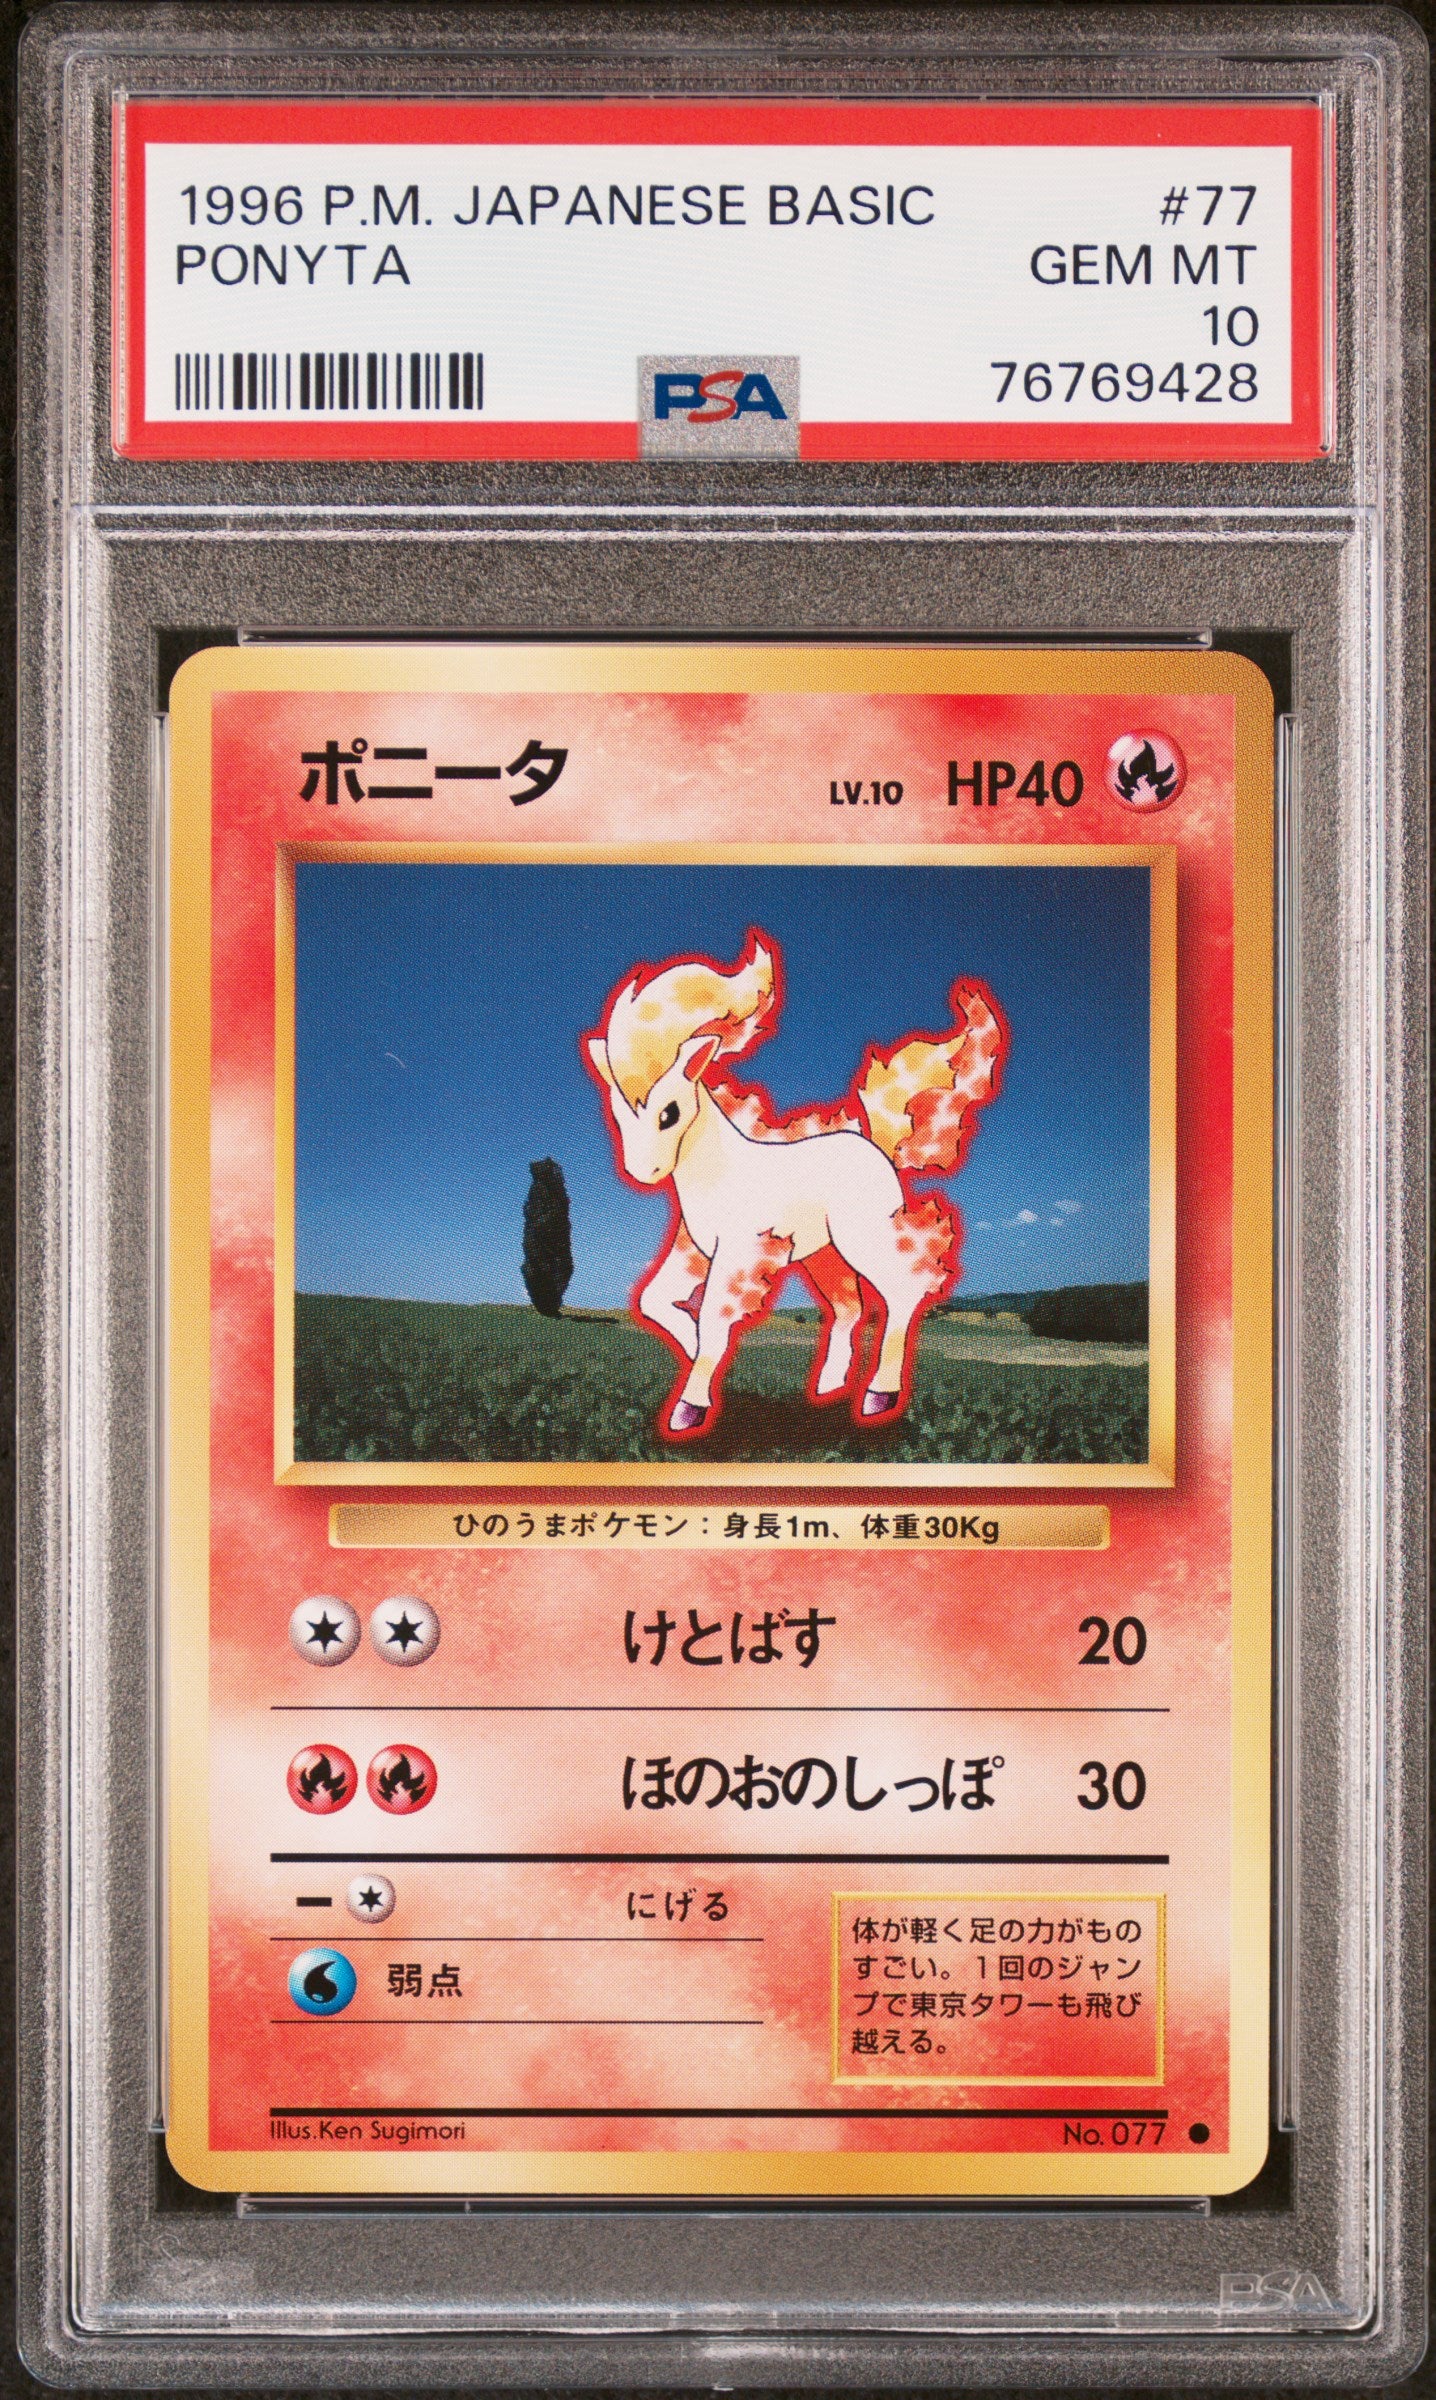 PSA 10 Japanese Ponyta (Graded Card)